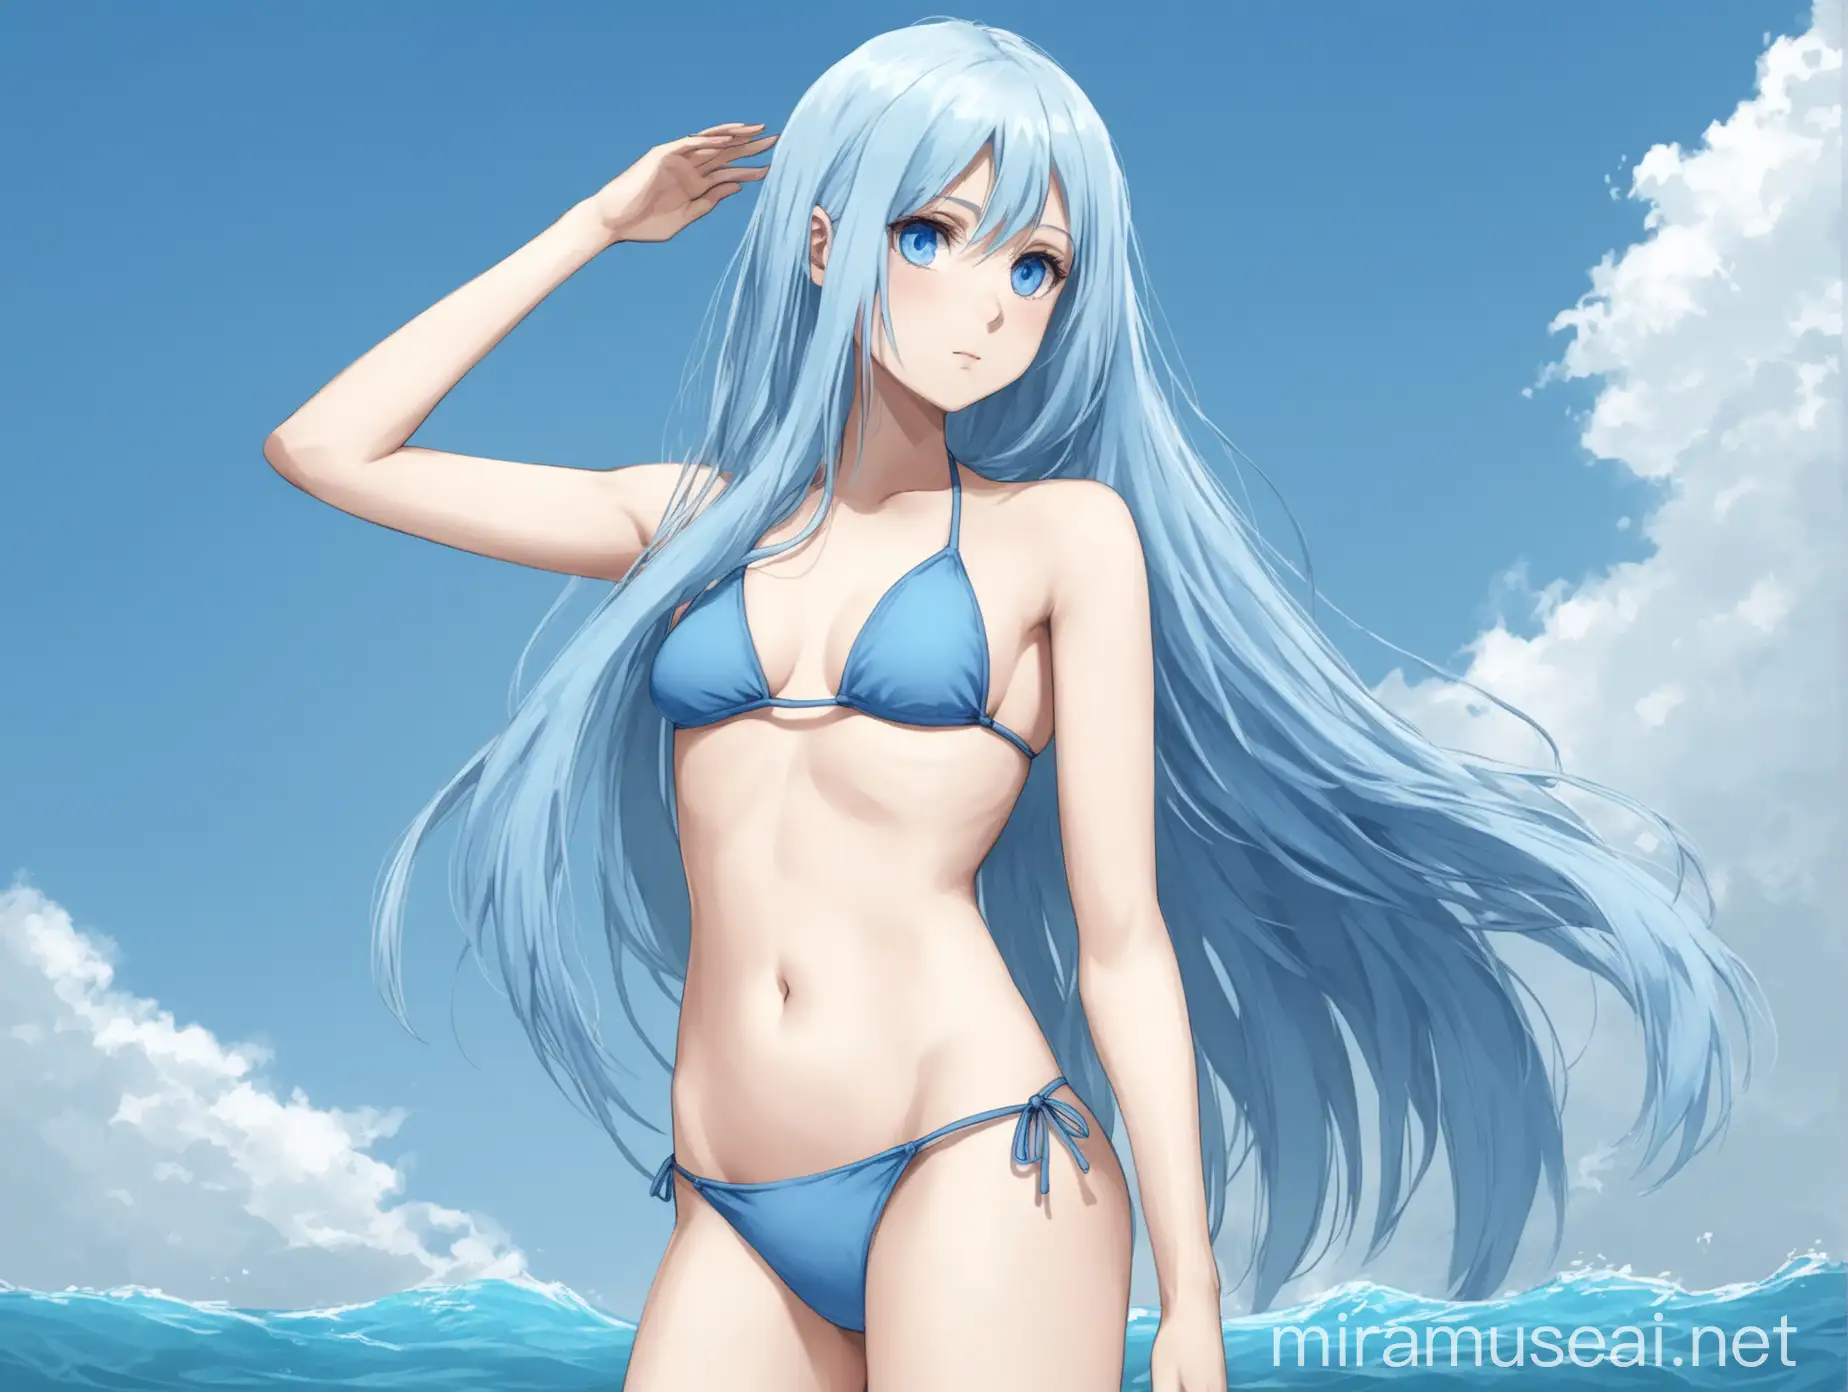 The girl stands tall, light blue hair color, blue eyes, in a blue bikini, medium chest size, long hair